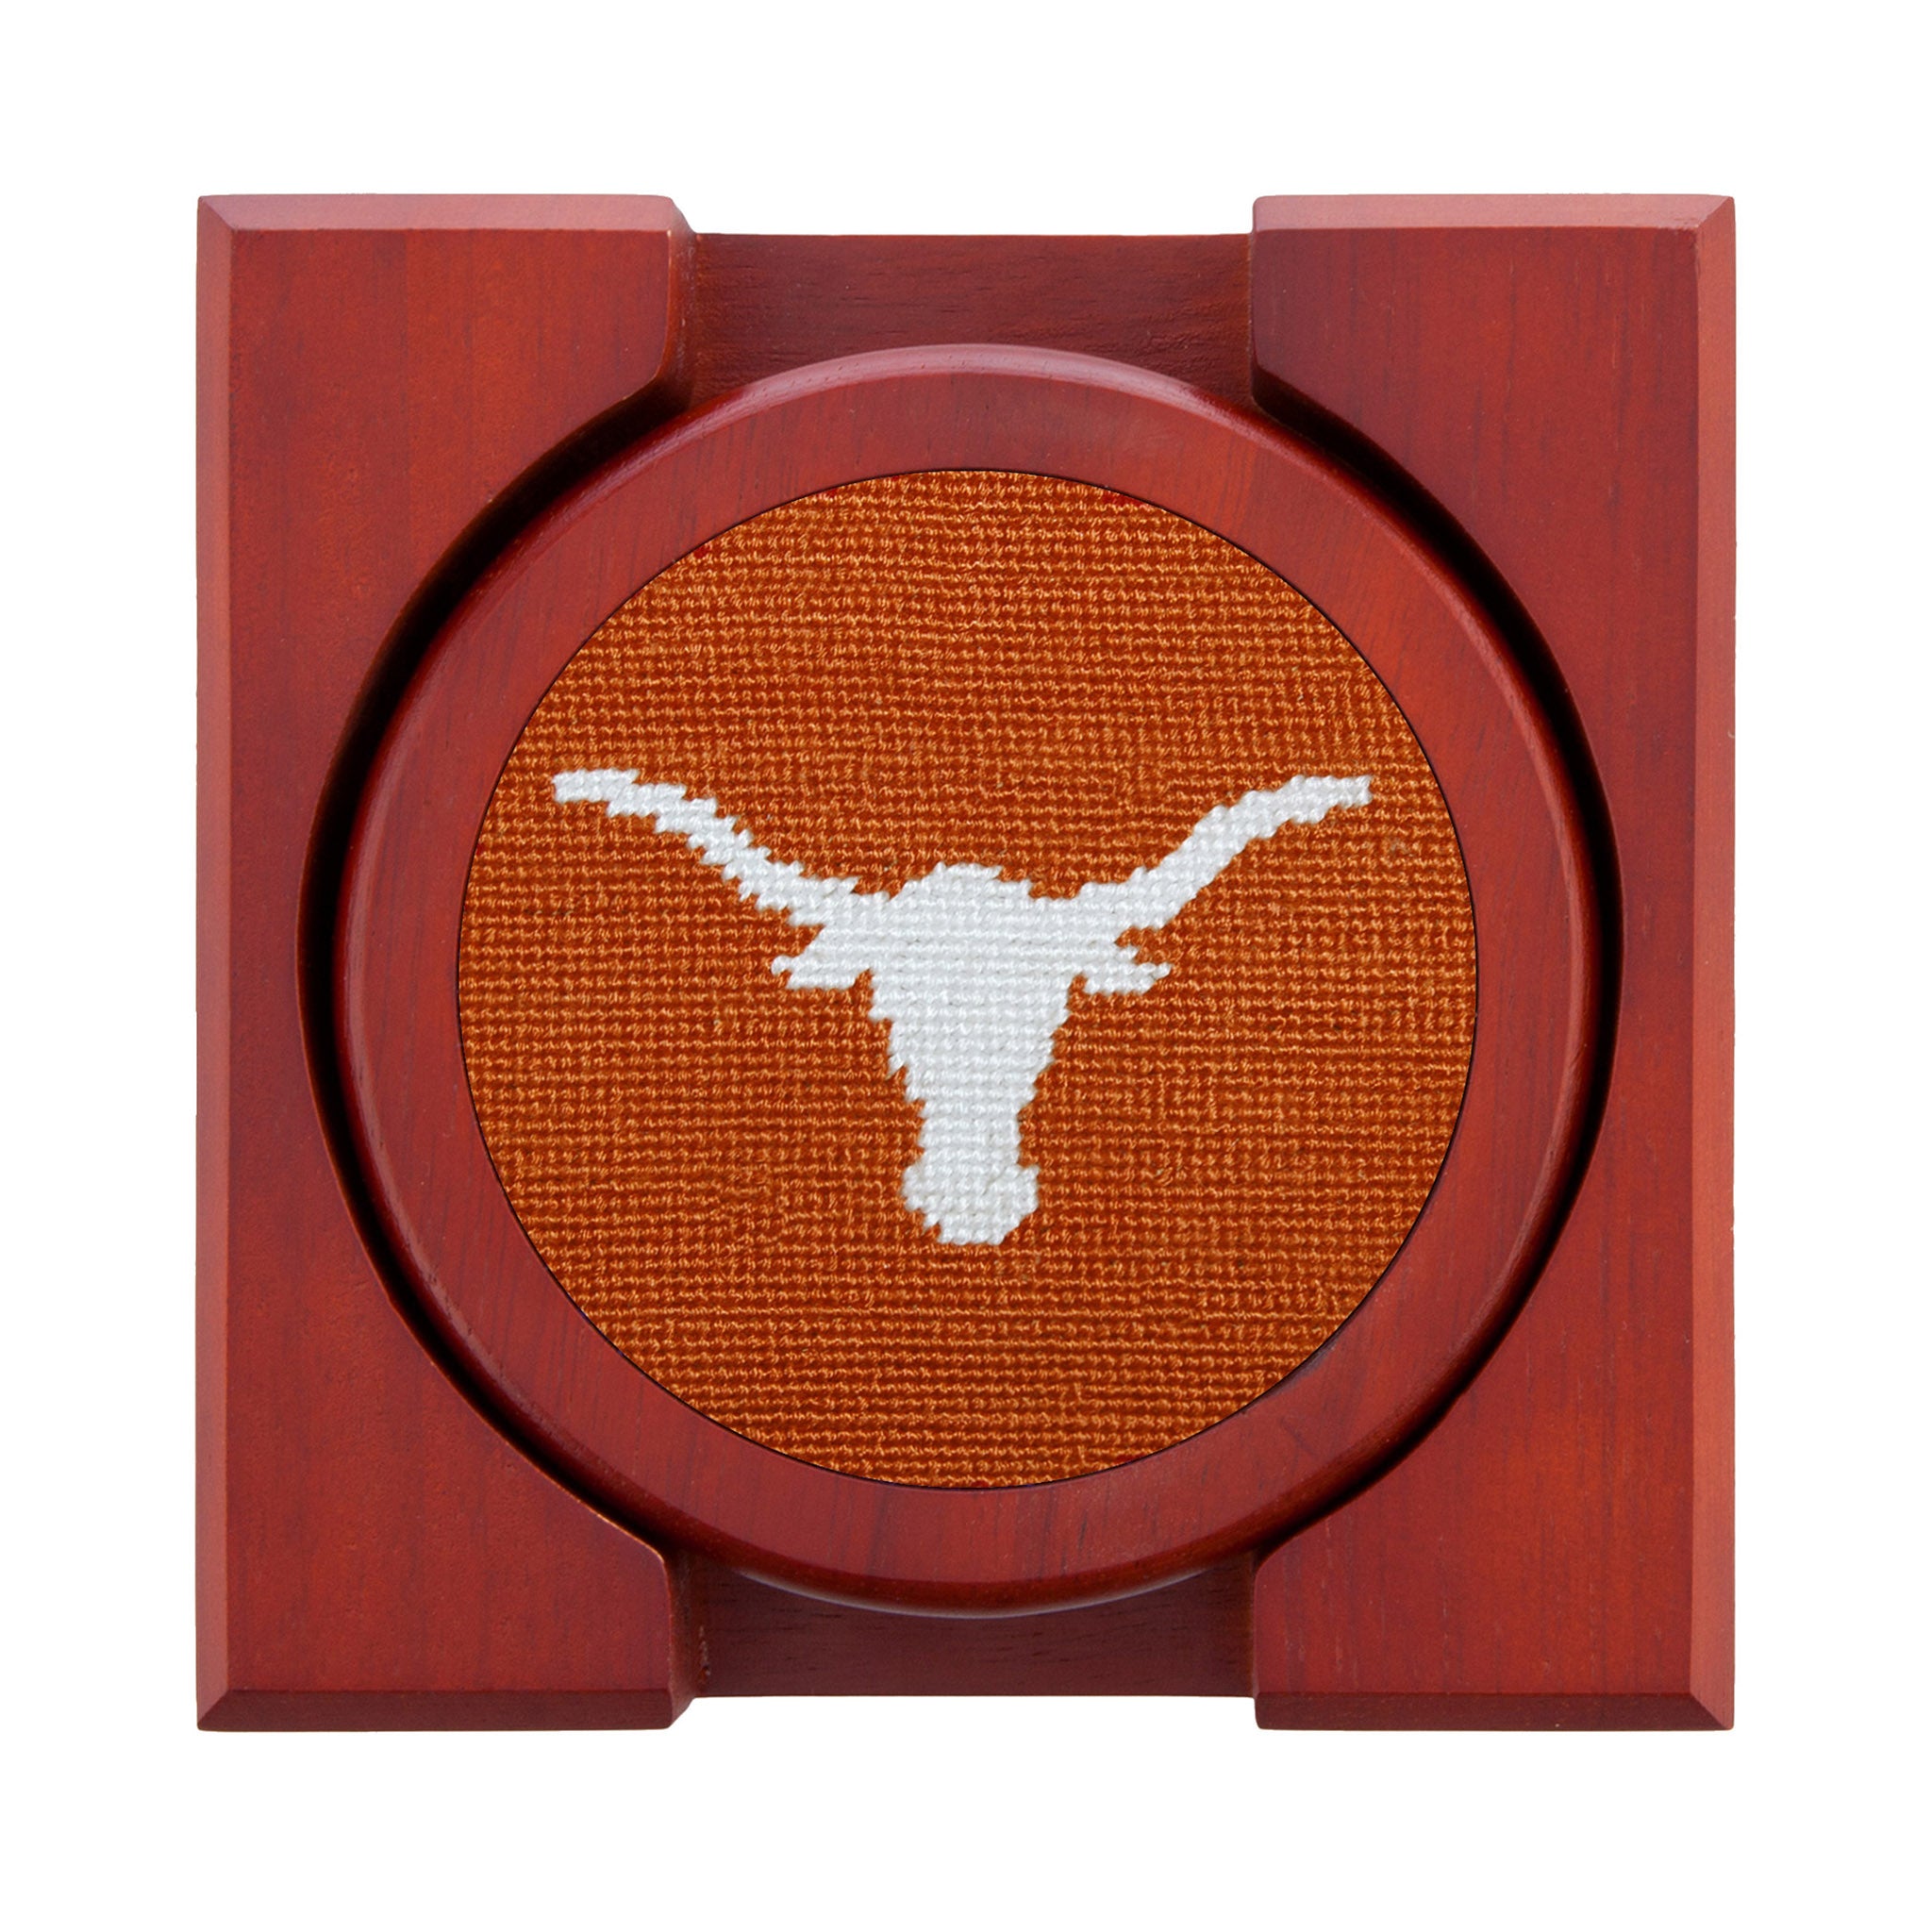 University of Texas Coasters (Burnt Orange)